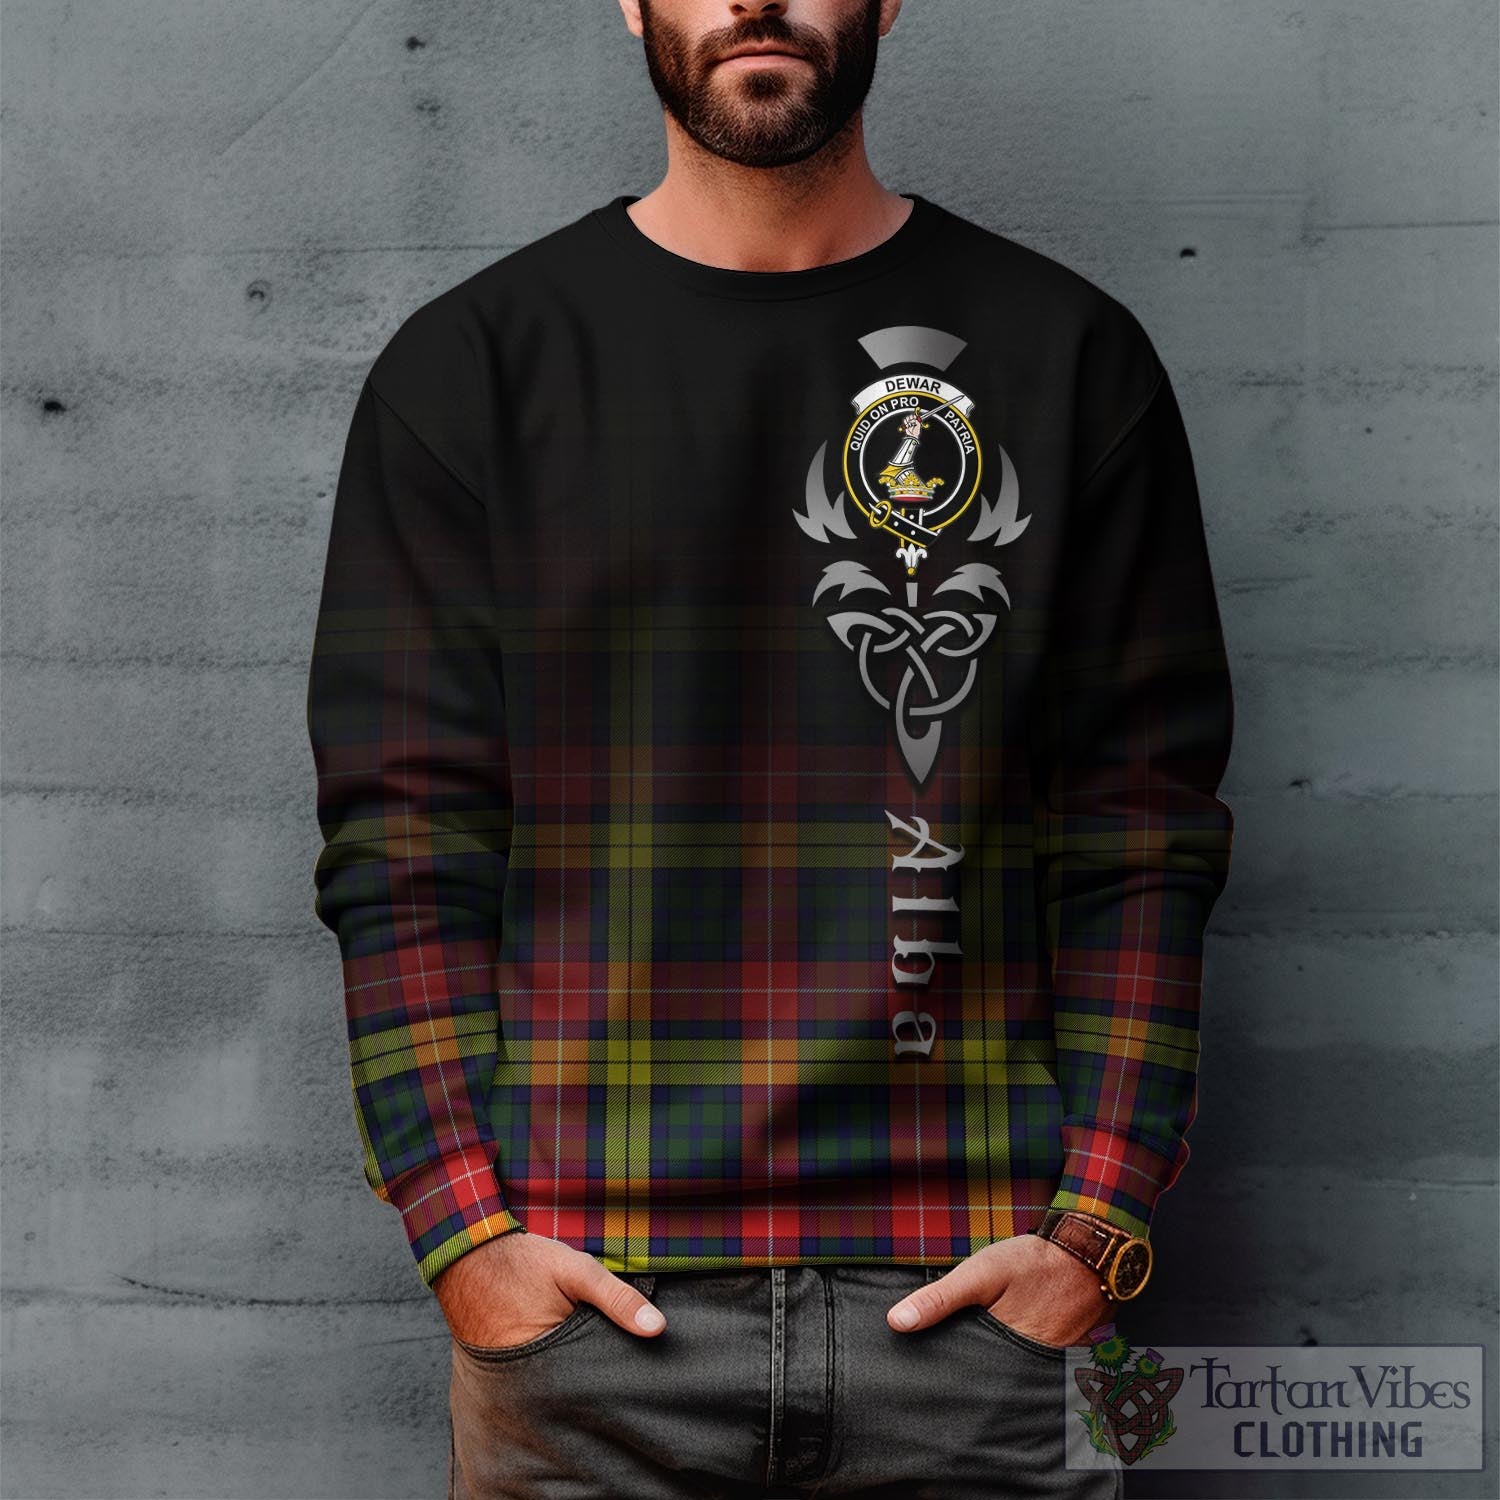 Tartan Vibes Clothing Dewar Tartan Sweatshirt Featuring Alba Gu Brath Family Crest Celtic Inspired